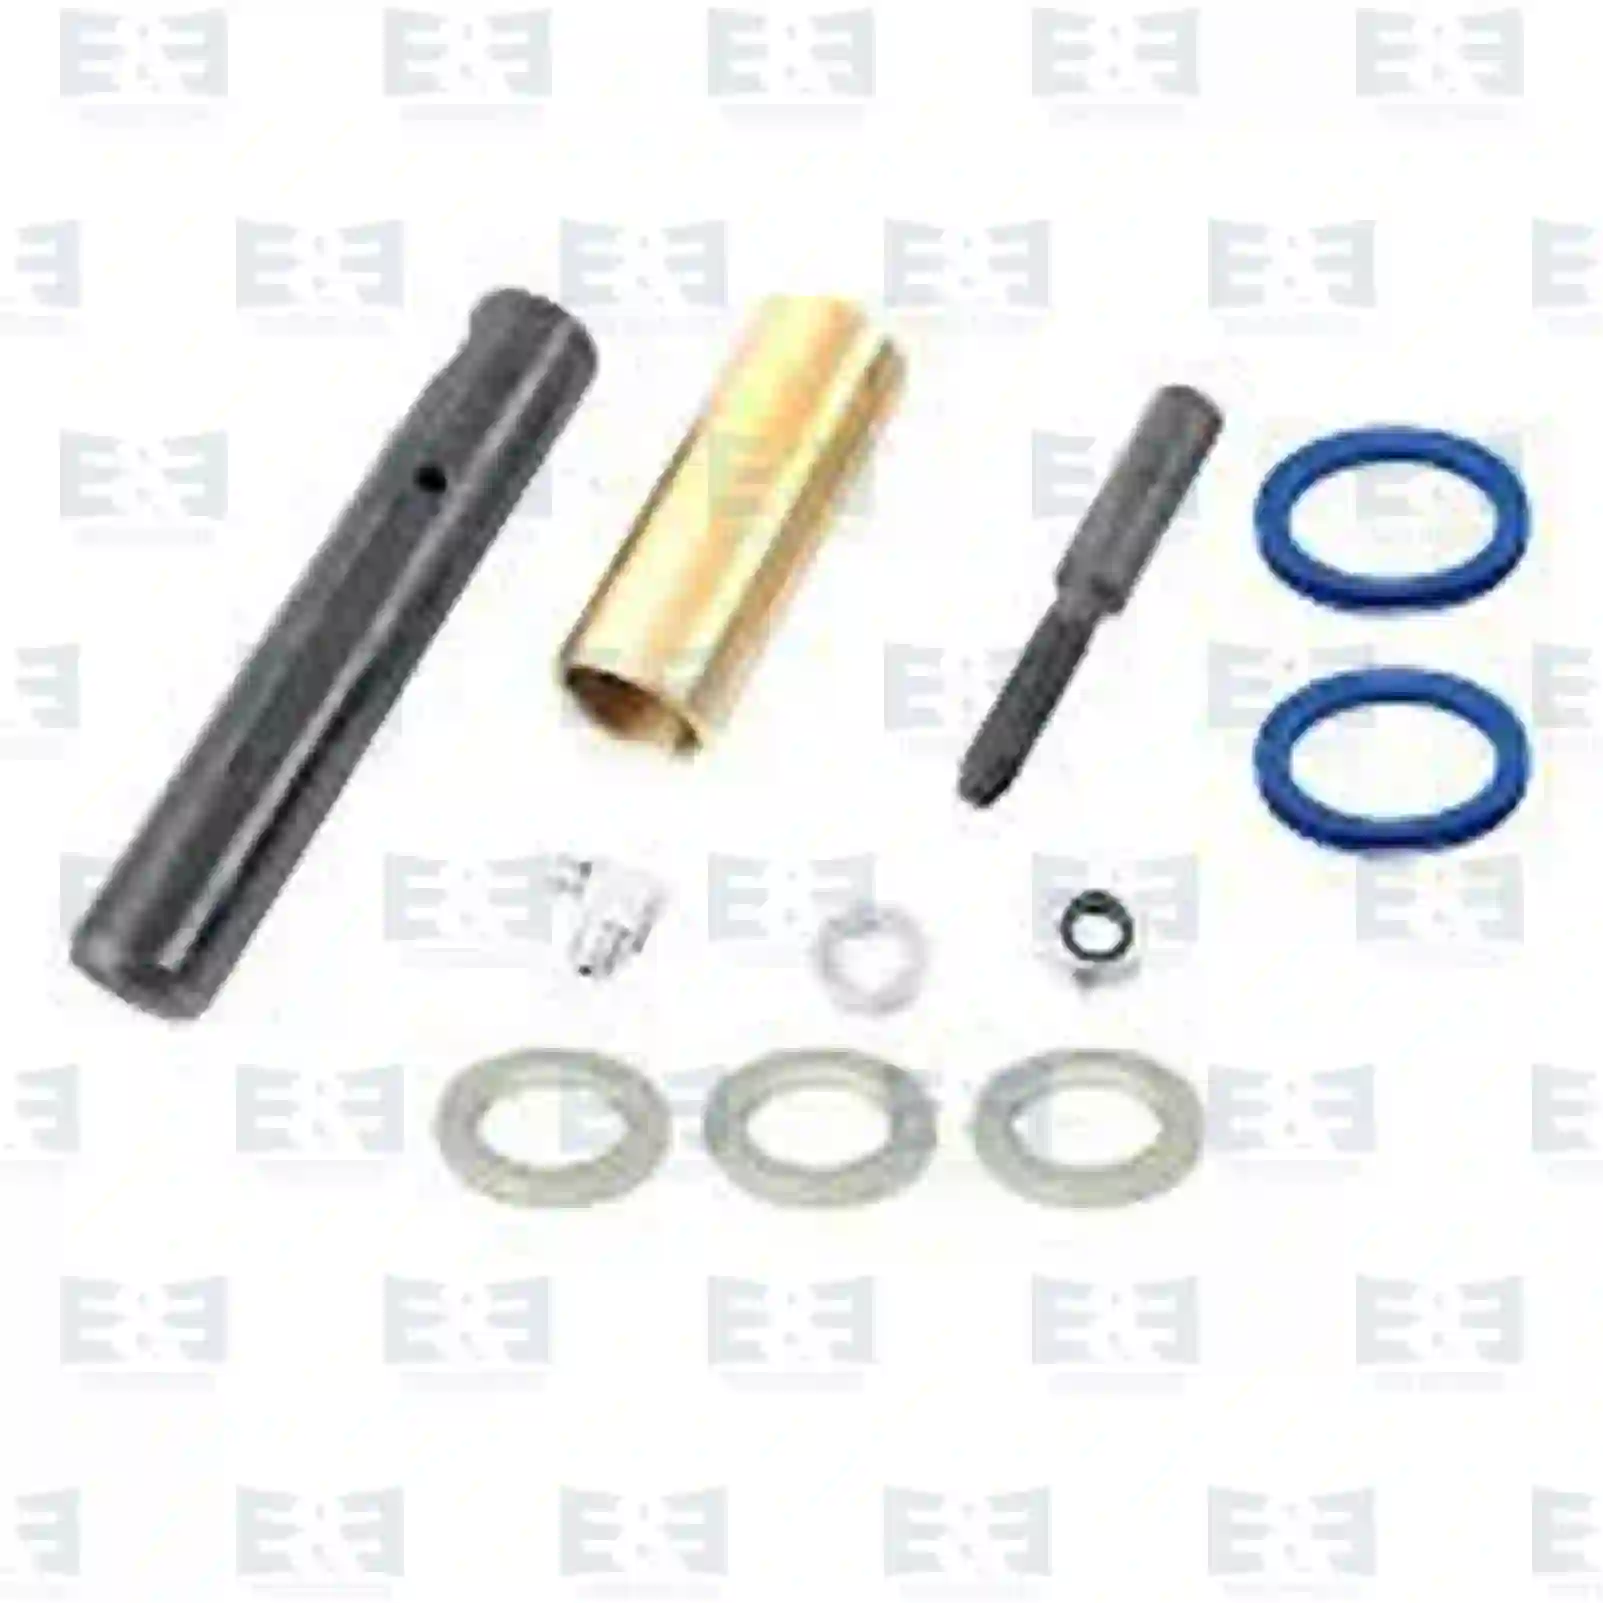  Spring bolt kit || E&E Truck Spare Parts | Truck Spare Parts, Auotomotive Spare Parts